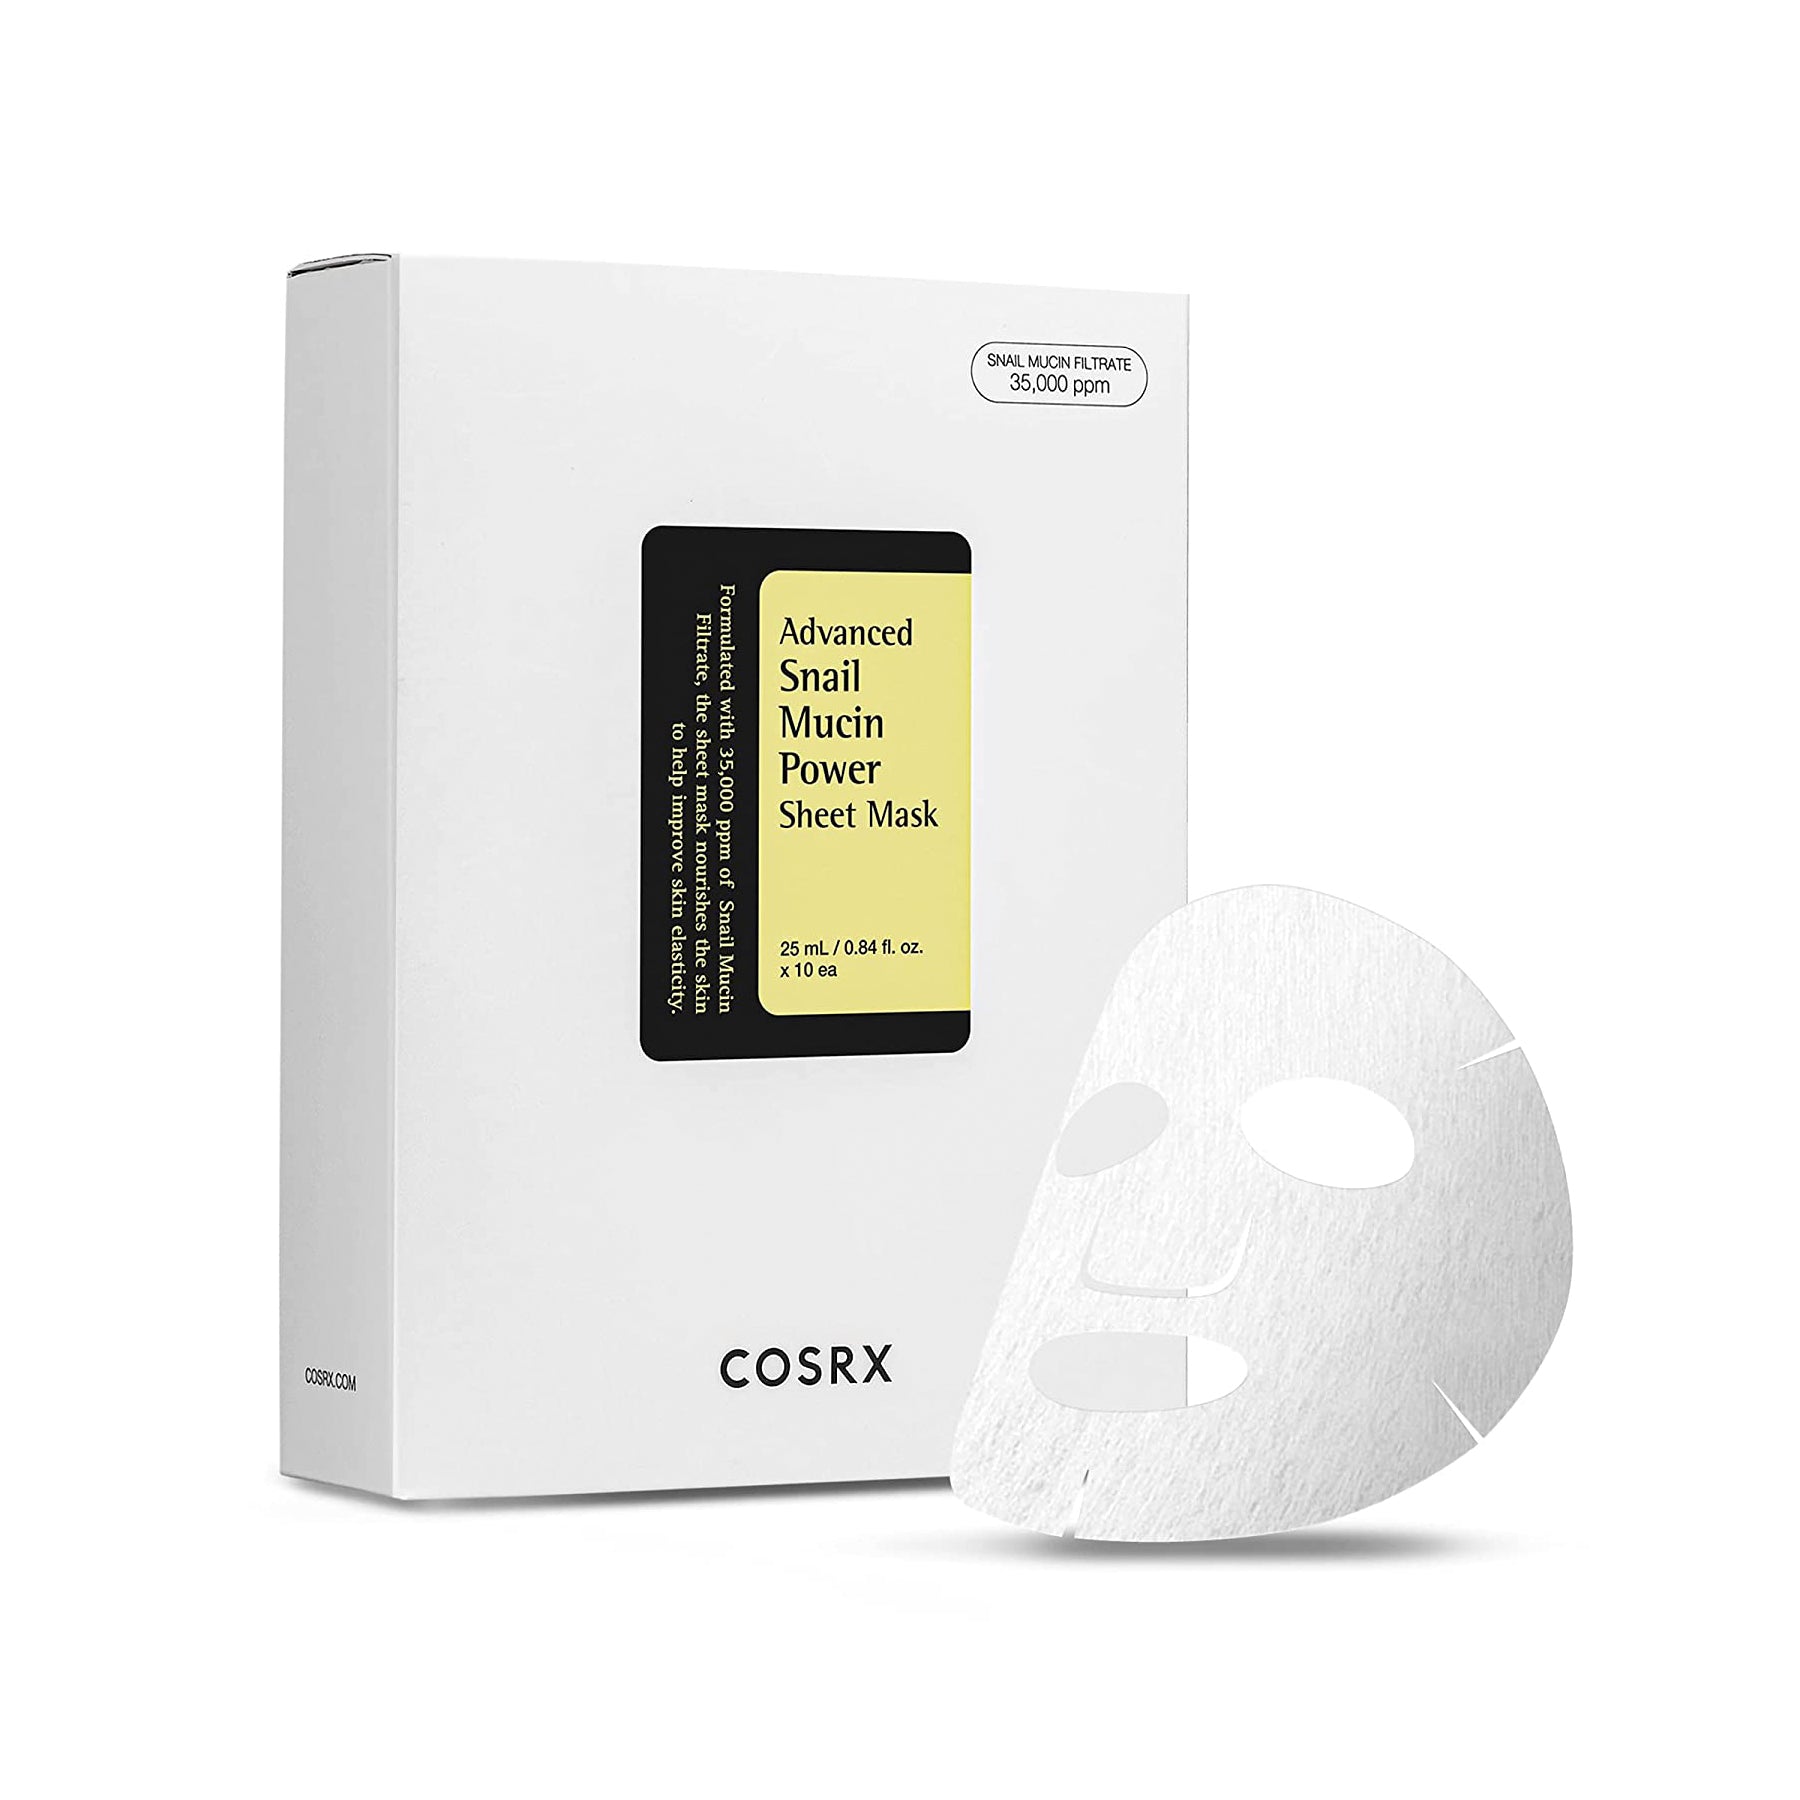 Cosrx Advanced Snail Mucin Power Sheet Mask Beauty Cosrx Box (10 Sheets)  